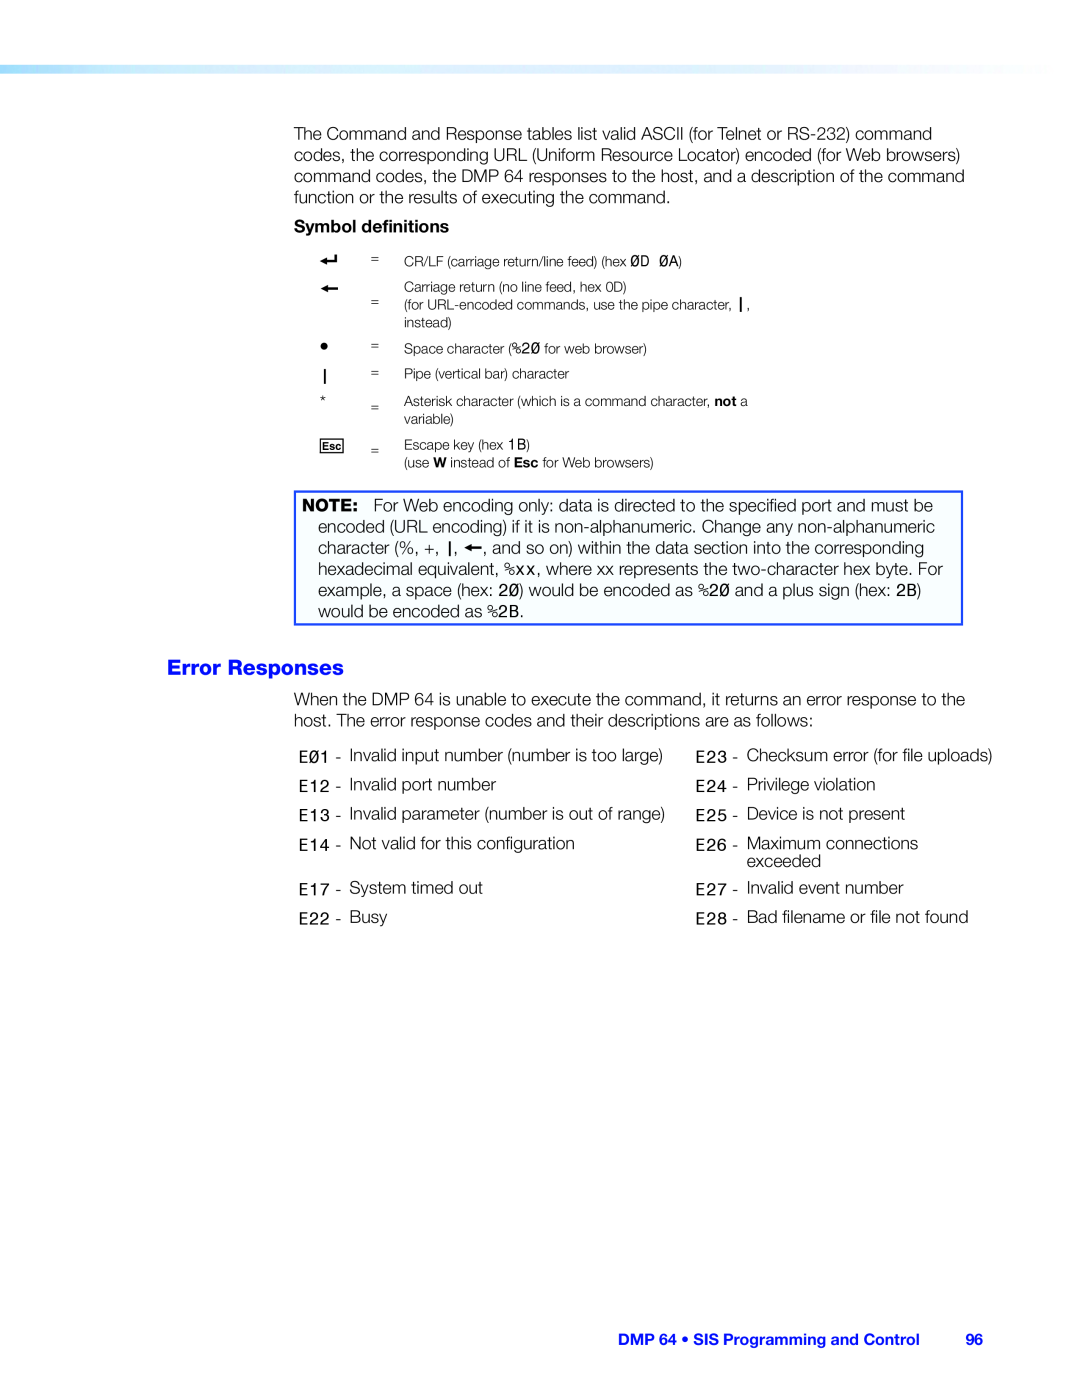 Extron electronic DMP 64 manual Error Responses, Symbol definitions 